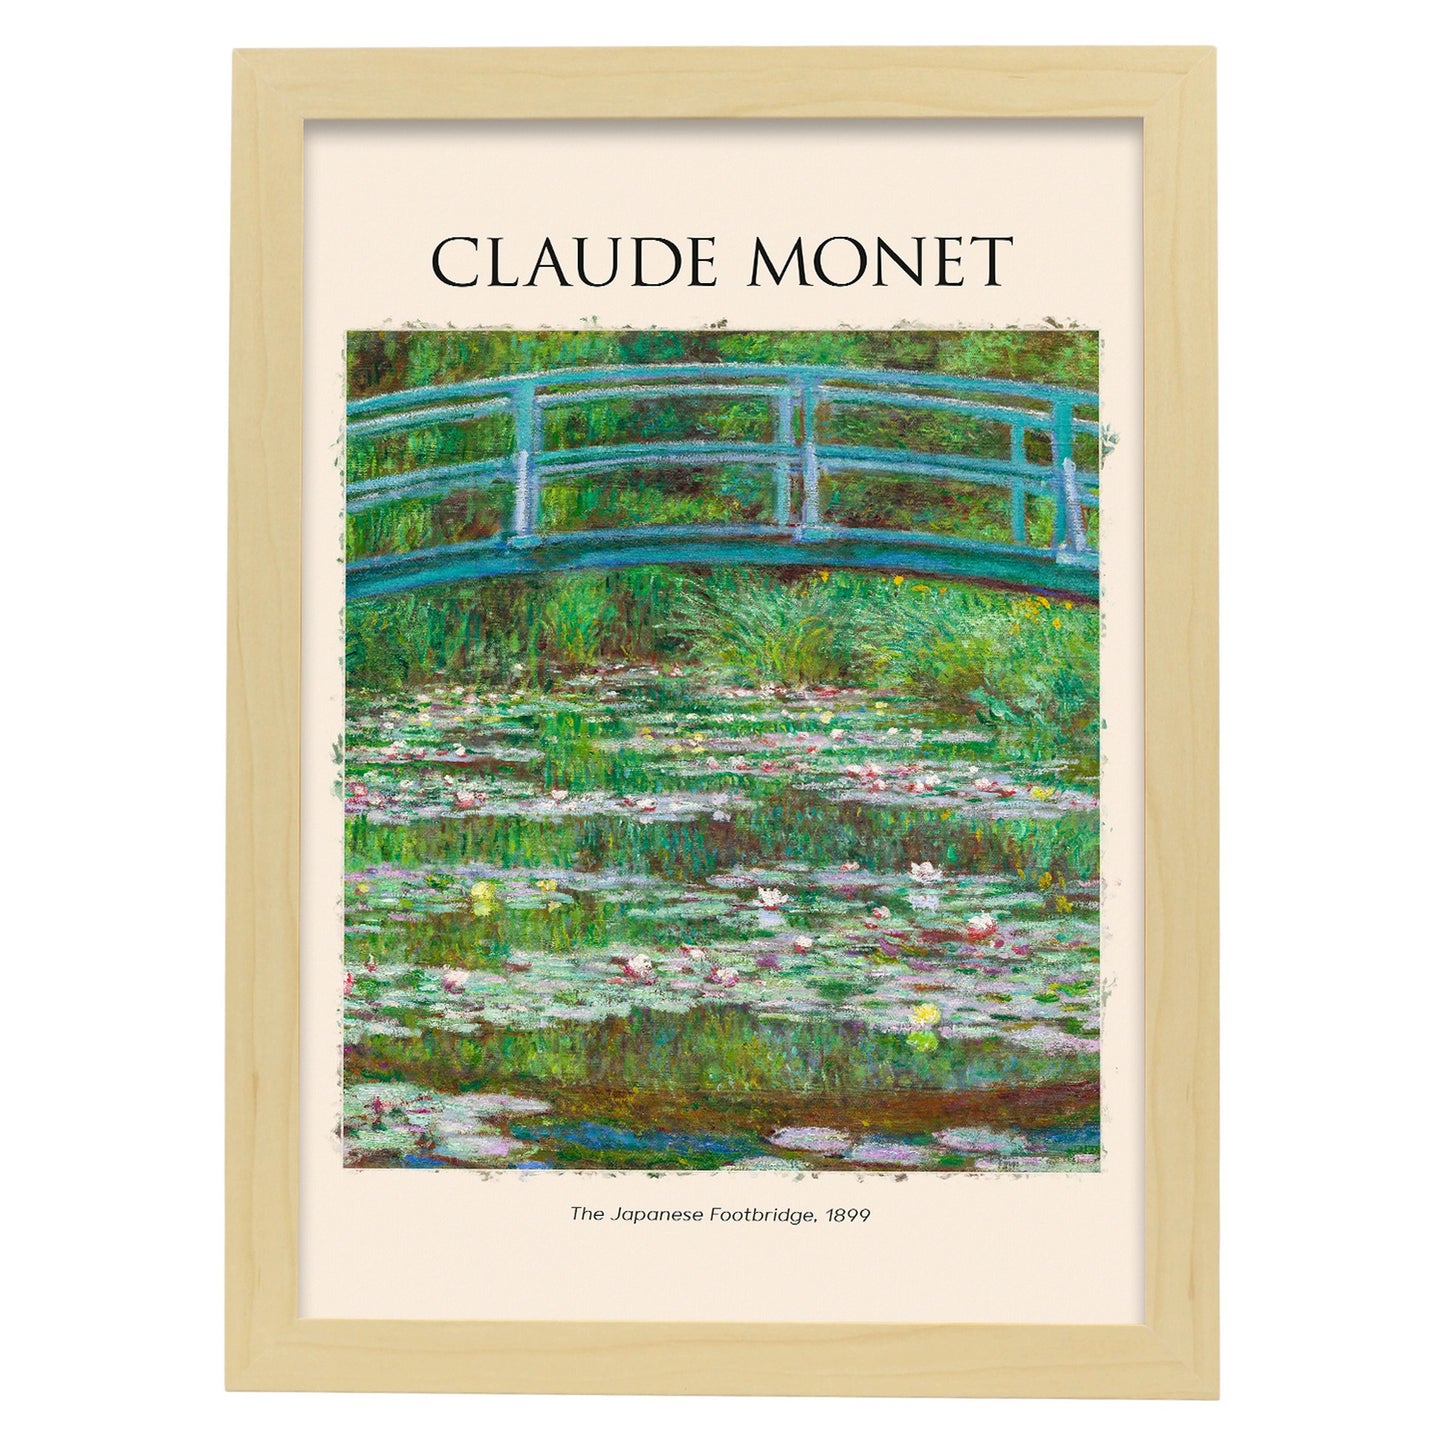 Lámina de Puente Japonés inspirada en Claude Monet